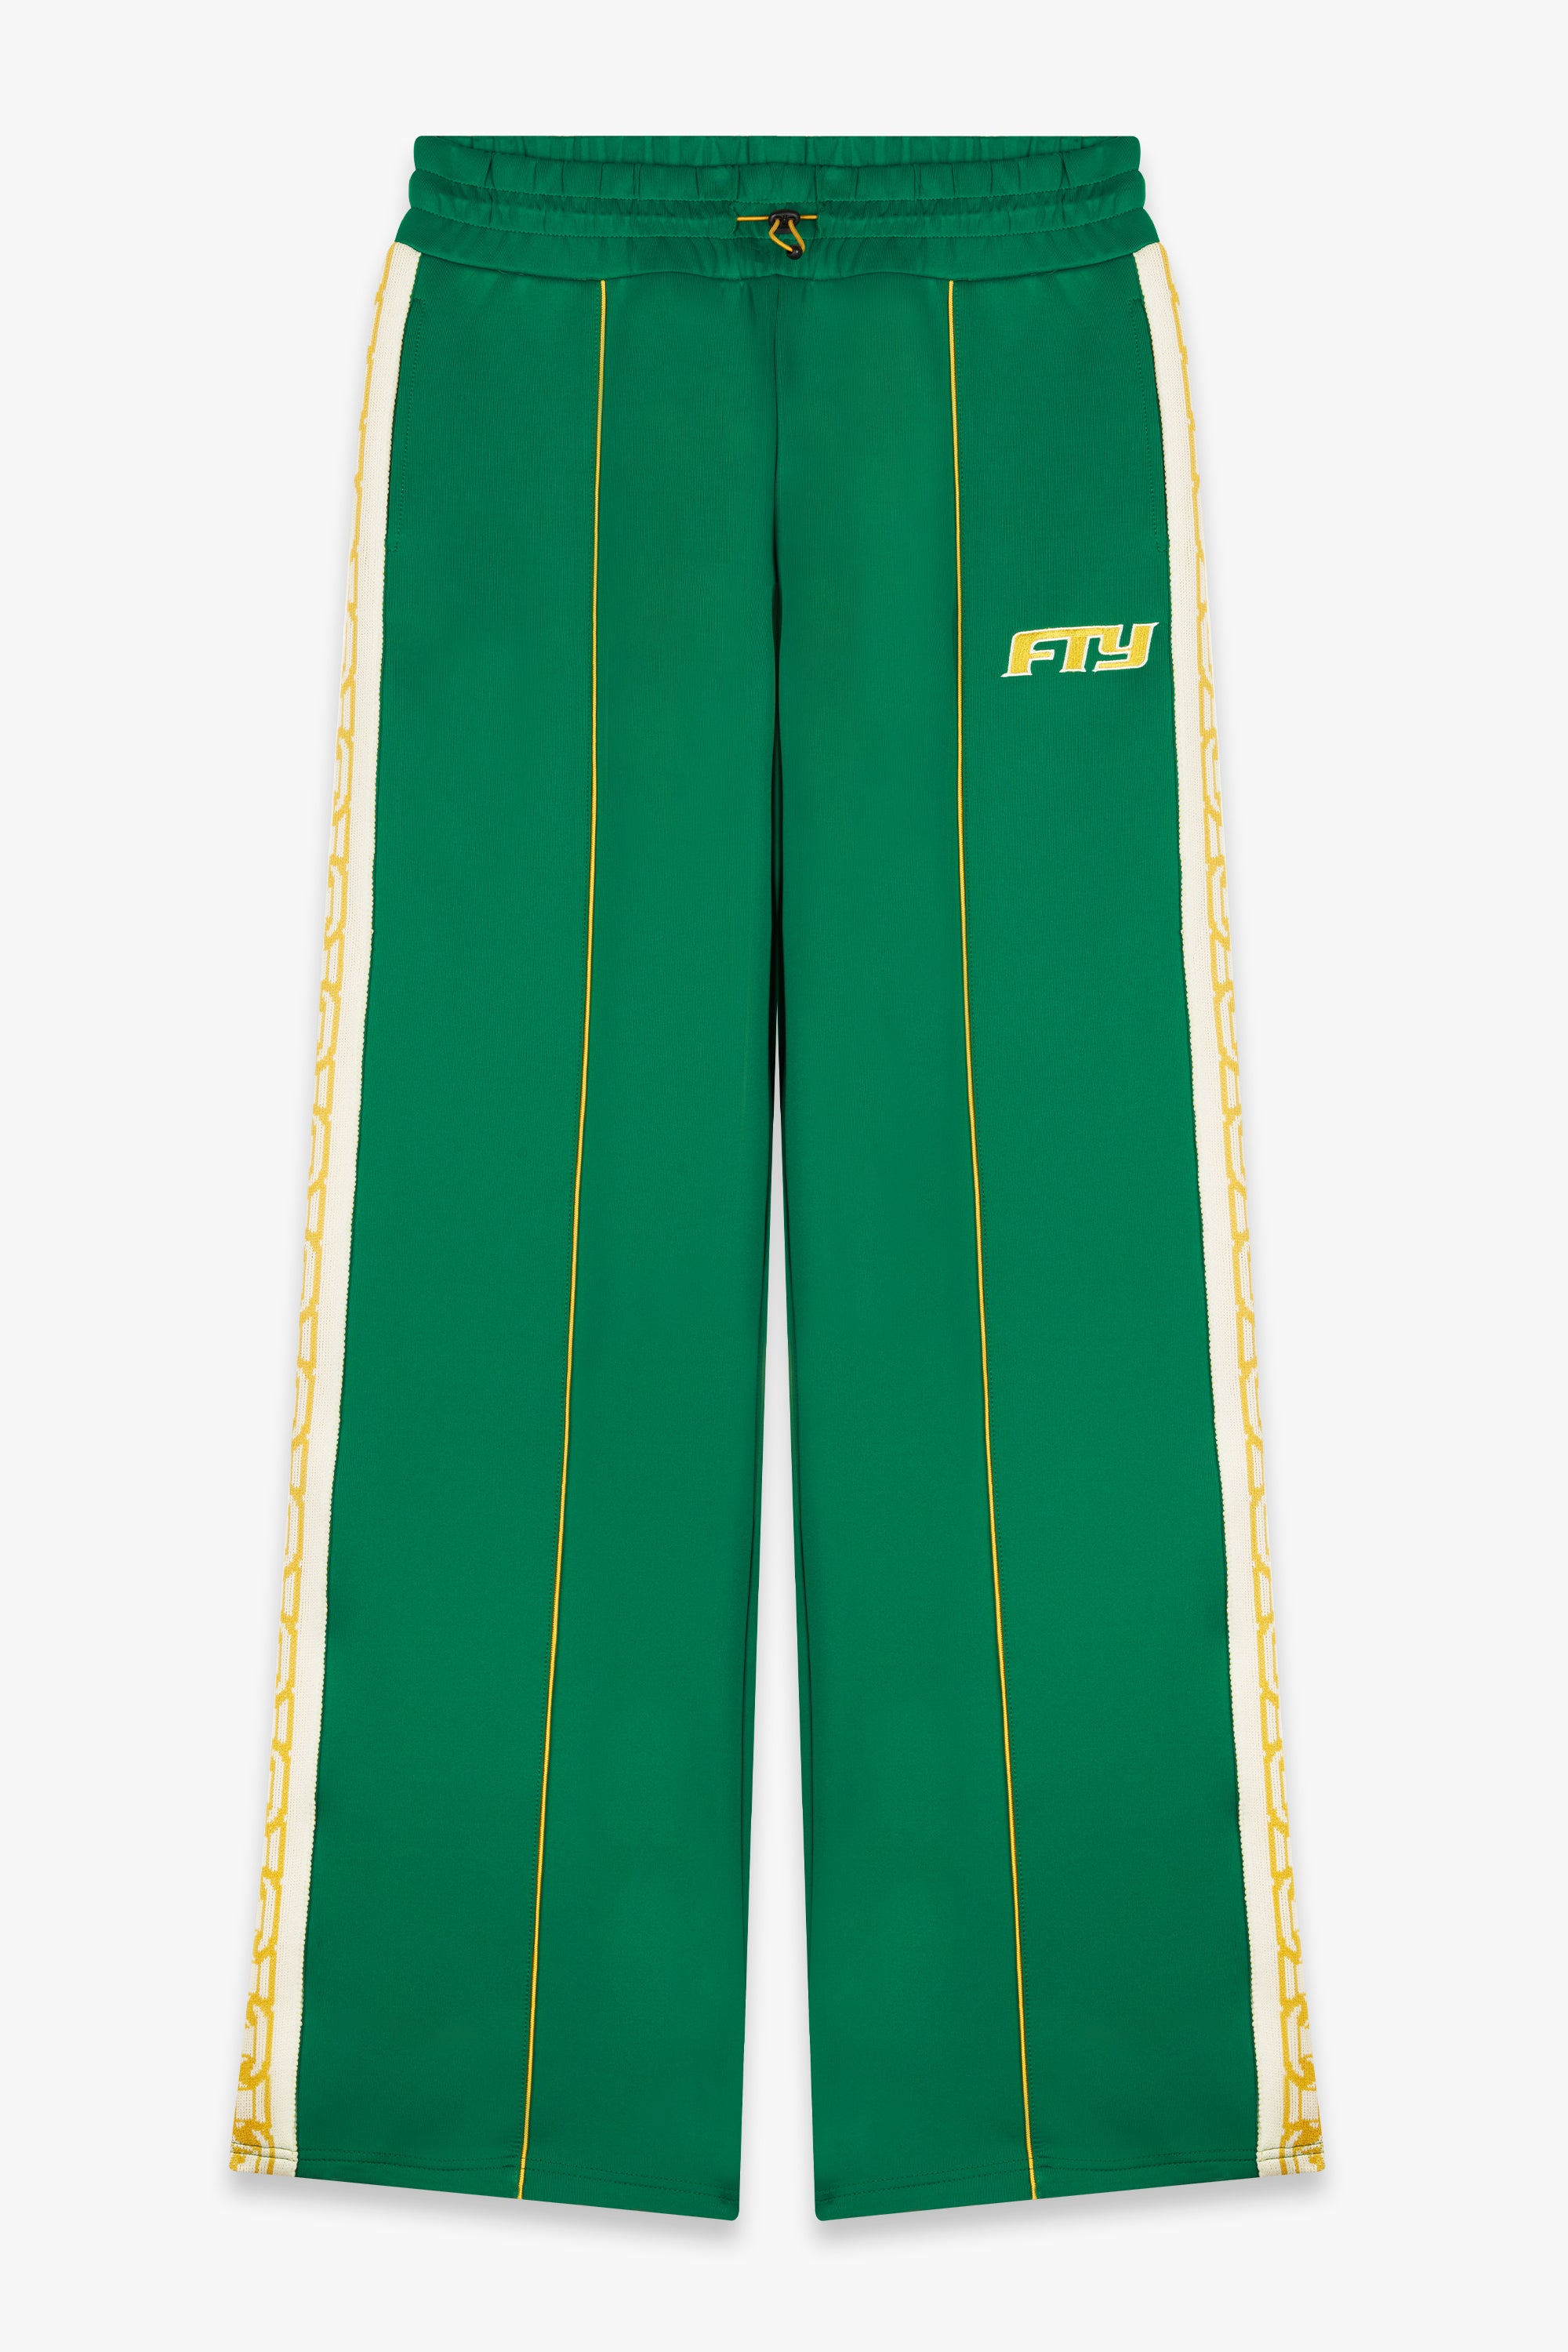 Fty Tear chain Track pants Green